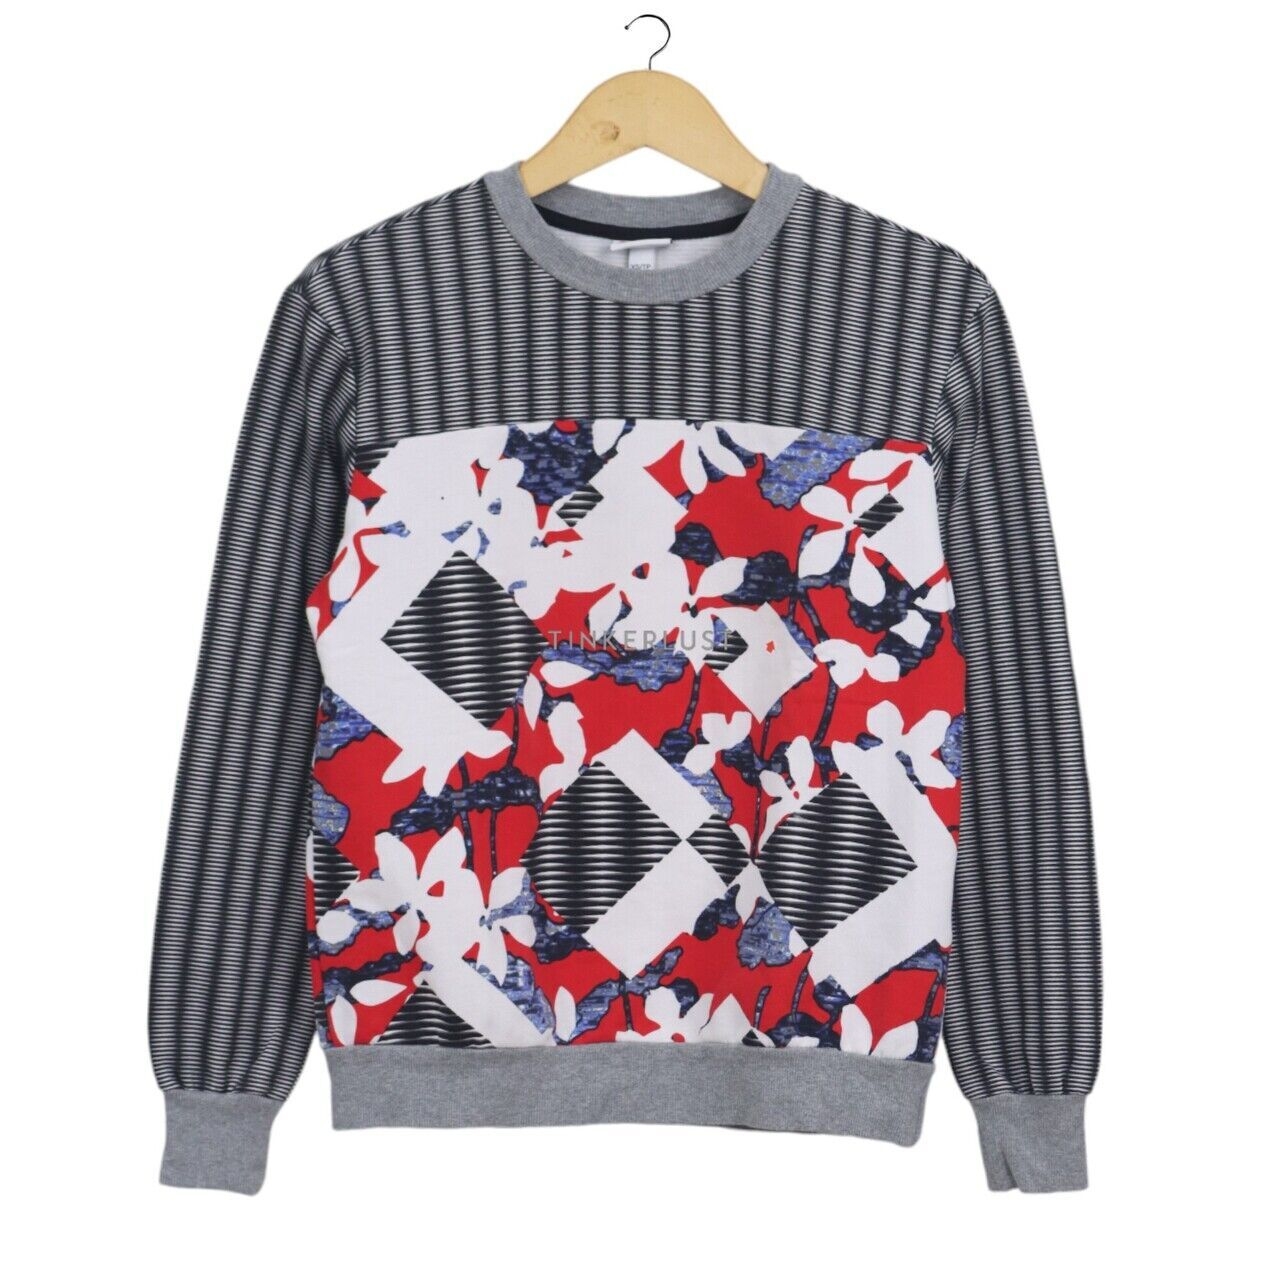 Peter Pilotto Multicolour Floral Sweater